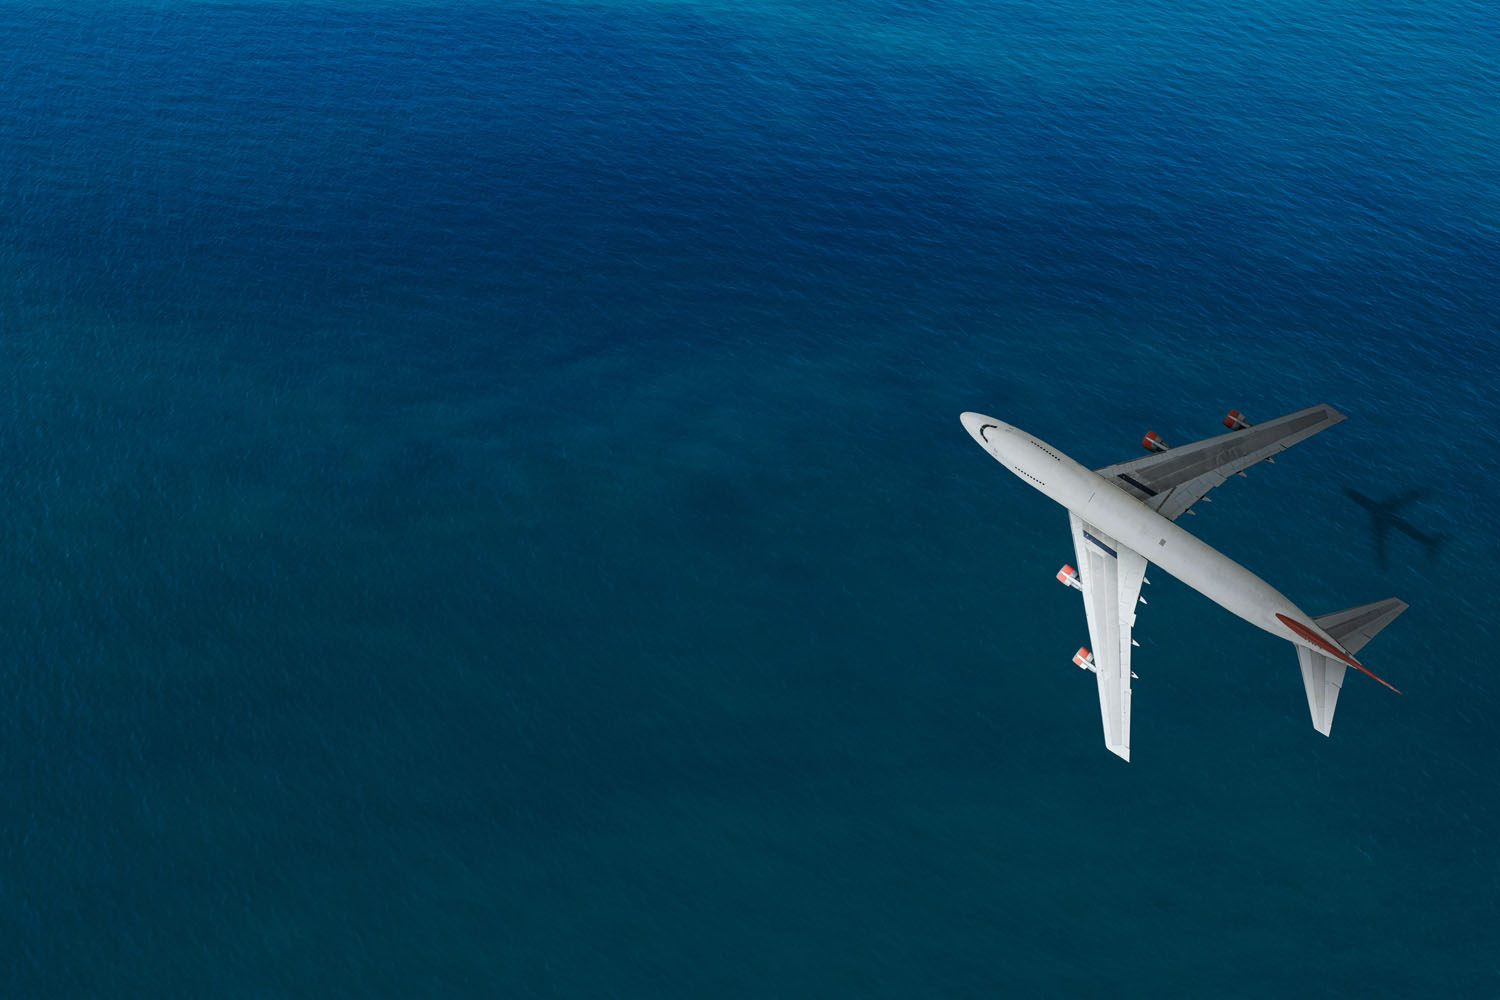 Plane over the ocean